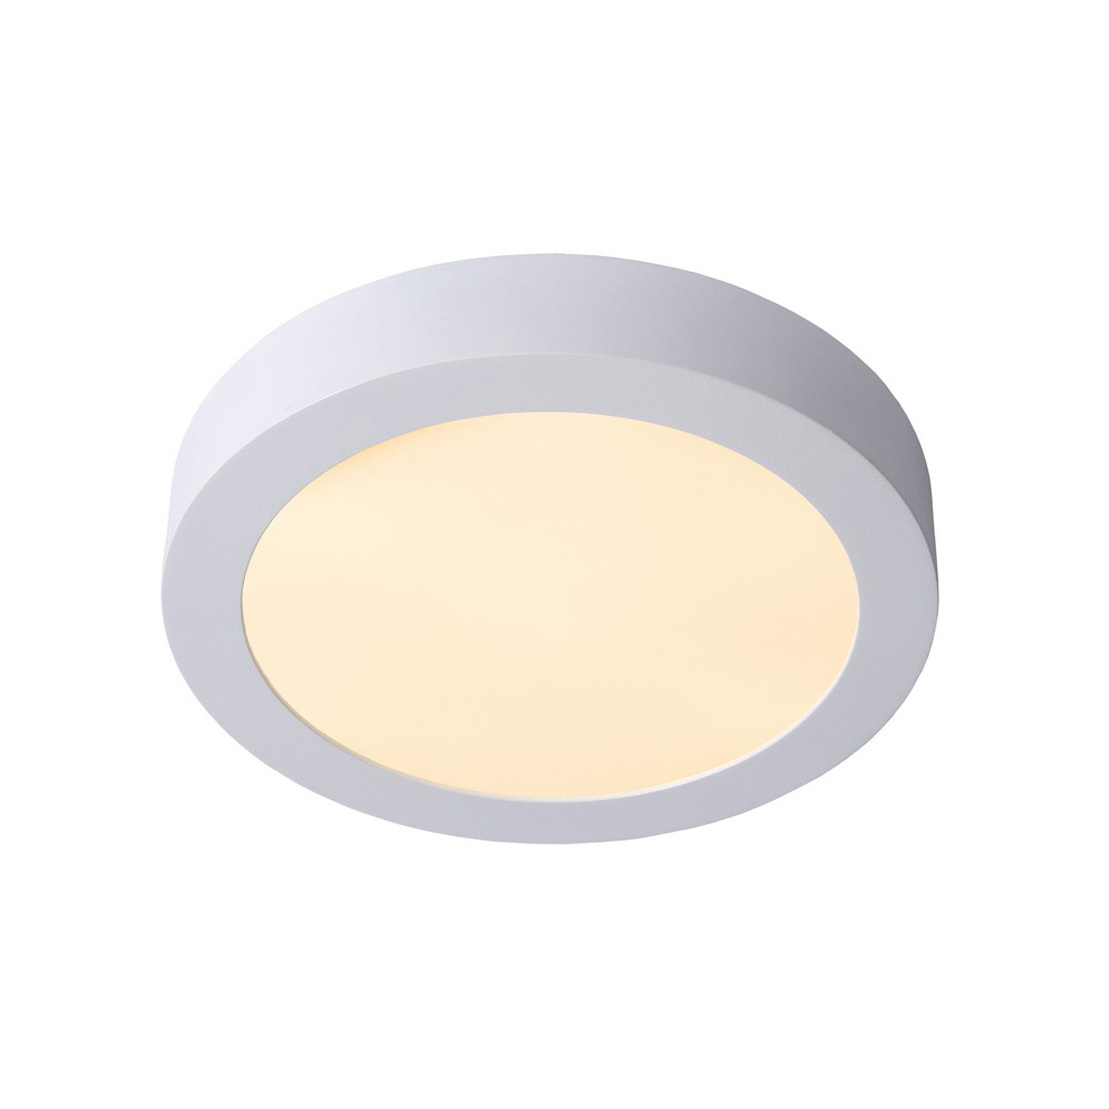 FocusLight SLIM LED - Kattovalaisin - Valkoinen - Integroitu LED - 20W LED (incl.)